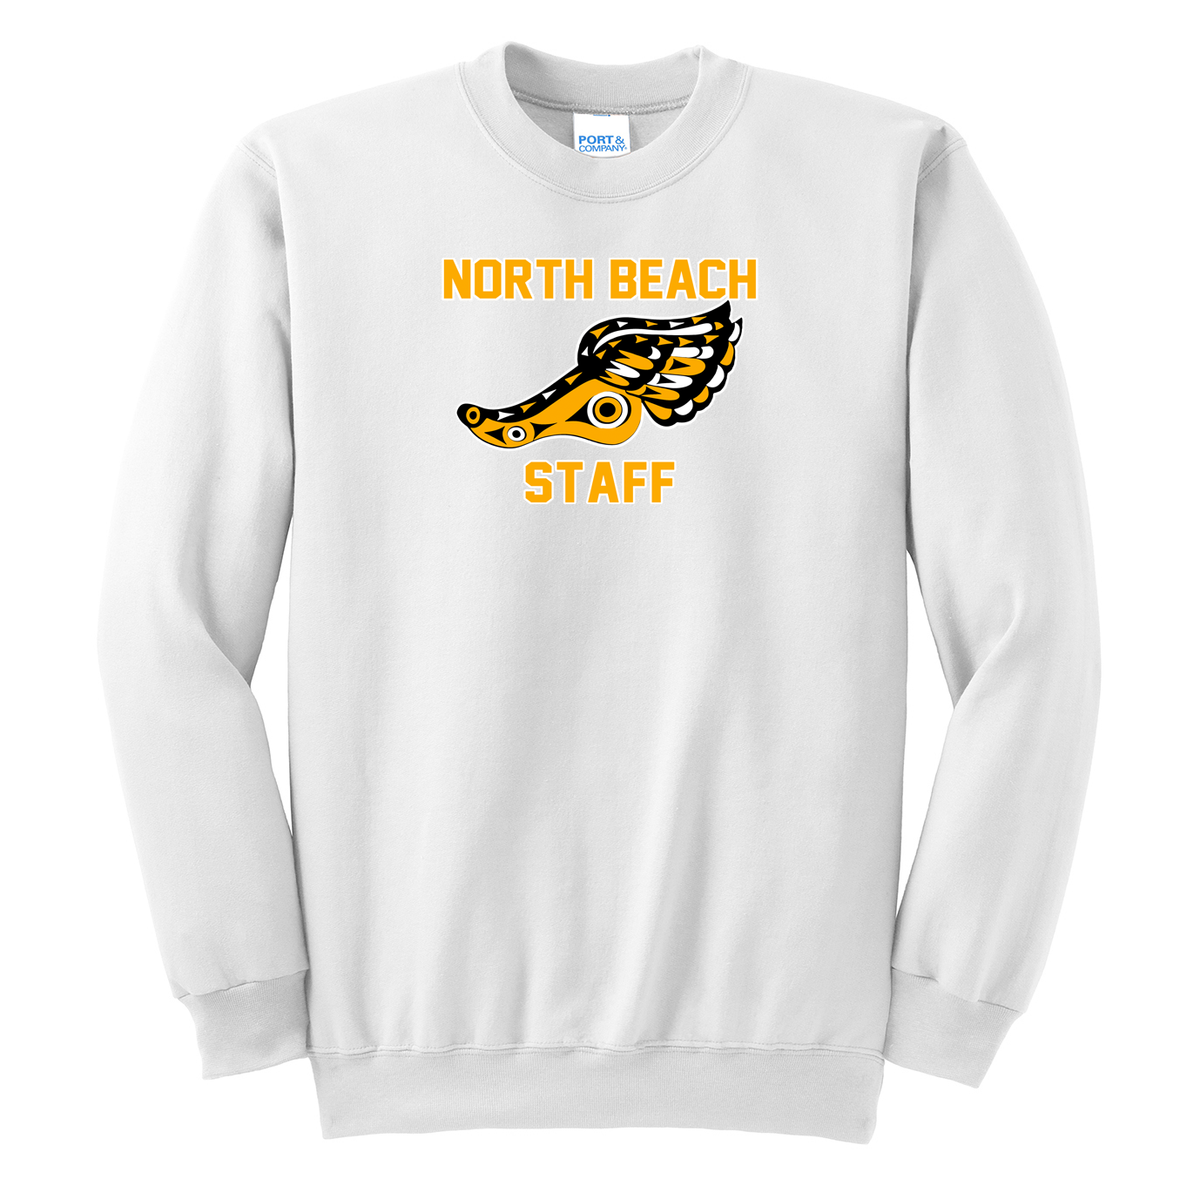 North Beach Staff Crew Neck Sweater